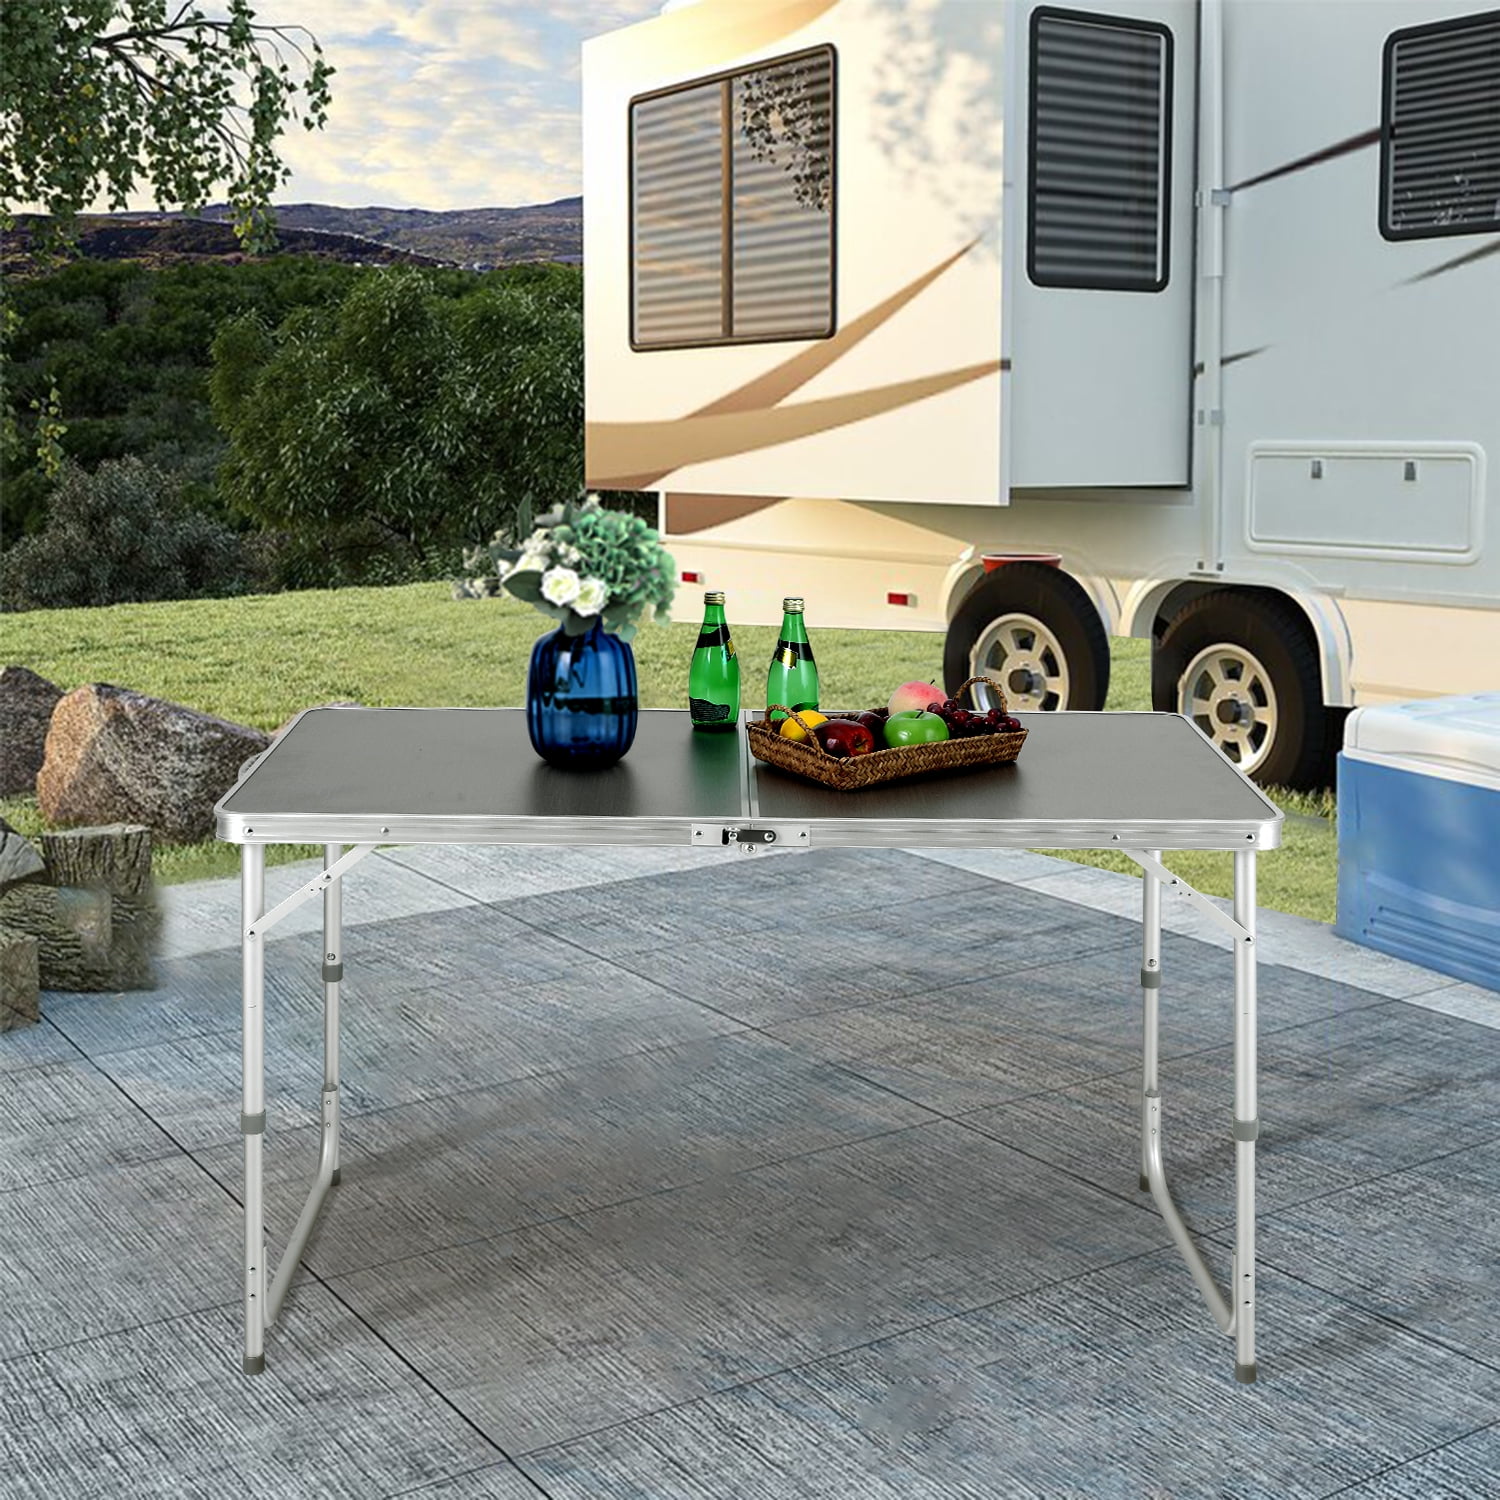 aluminum folding camping tables